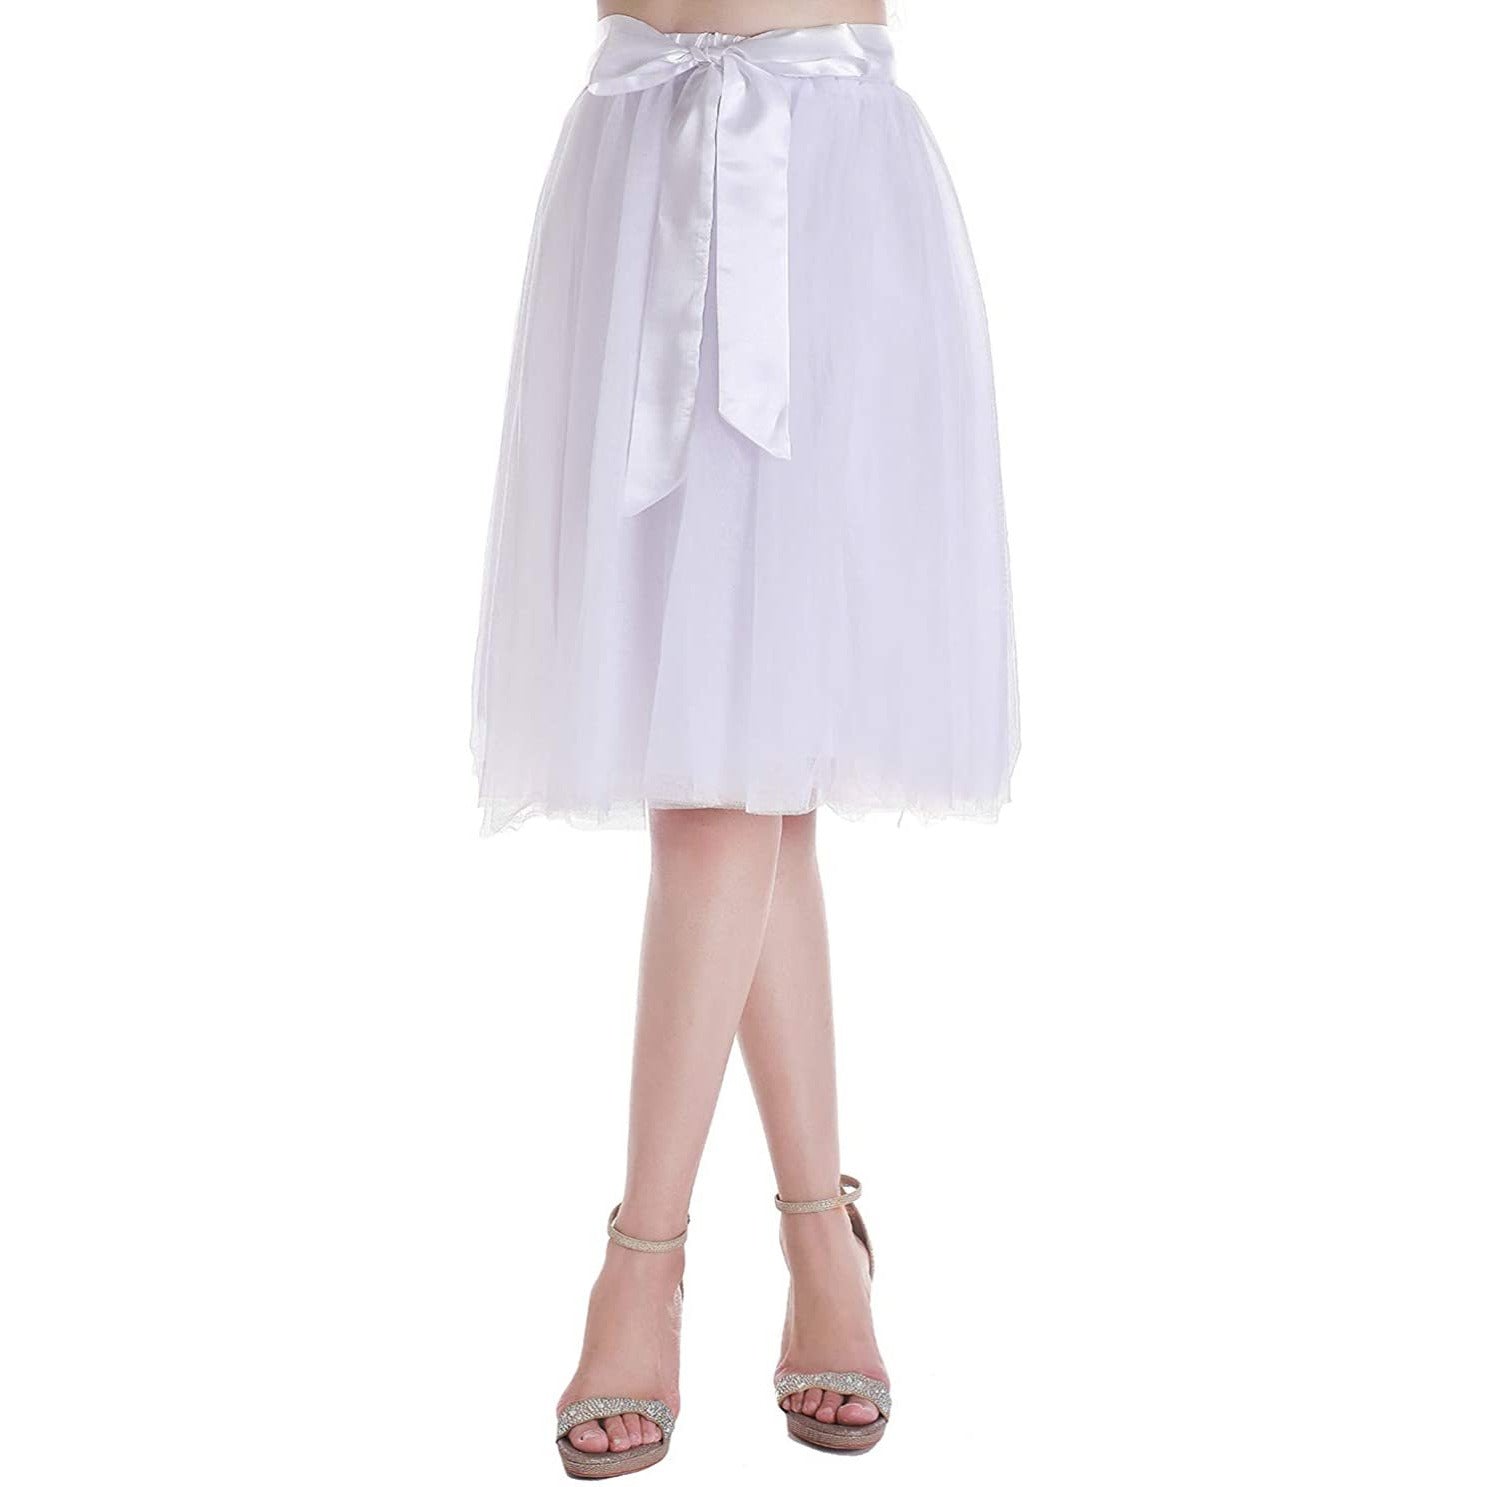 Dancina Women's A-Line Tea Length Midi Tulle Skirt - Regular and Plus Size in White